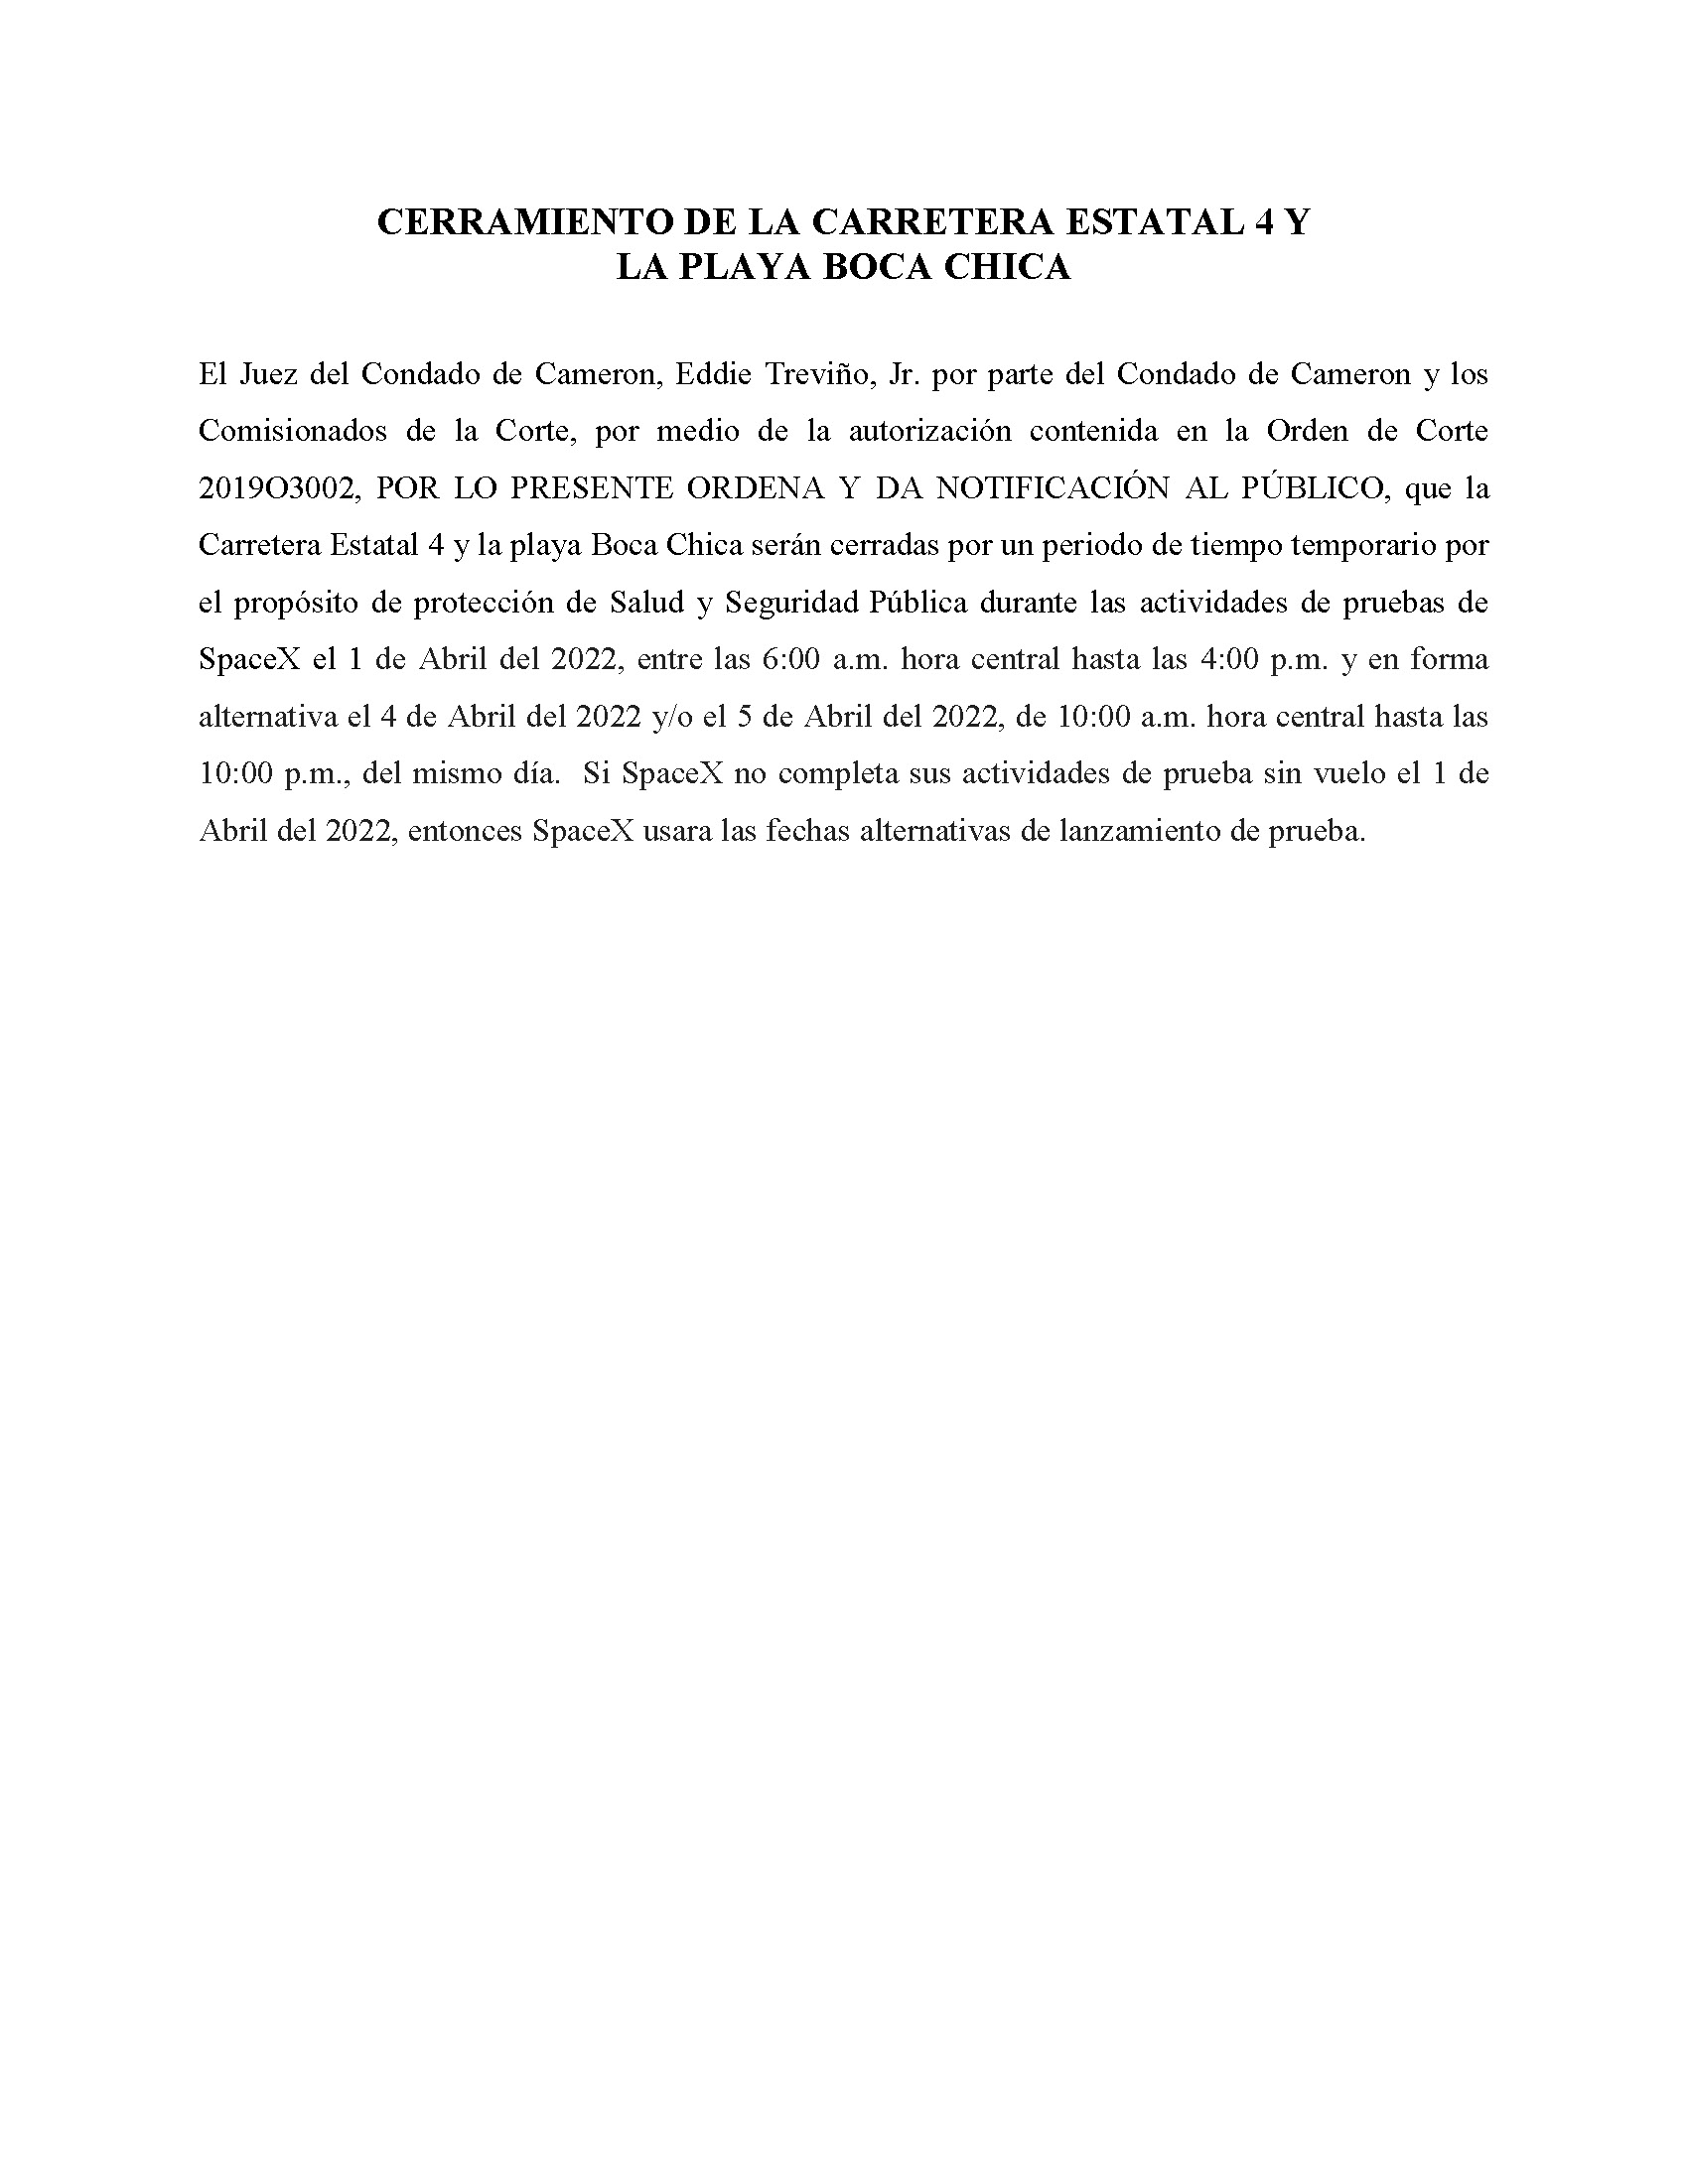 ORDER.CLOSURE OF HIGHWAY 4 Y LA PLAYA BOCA CHICA.SPANISH.04.01.2022